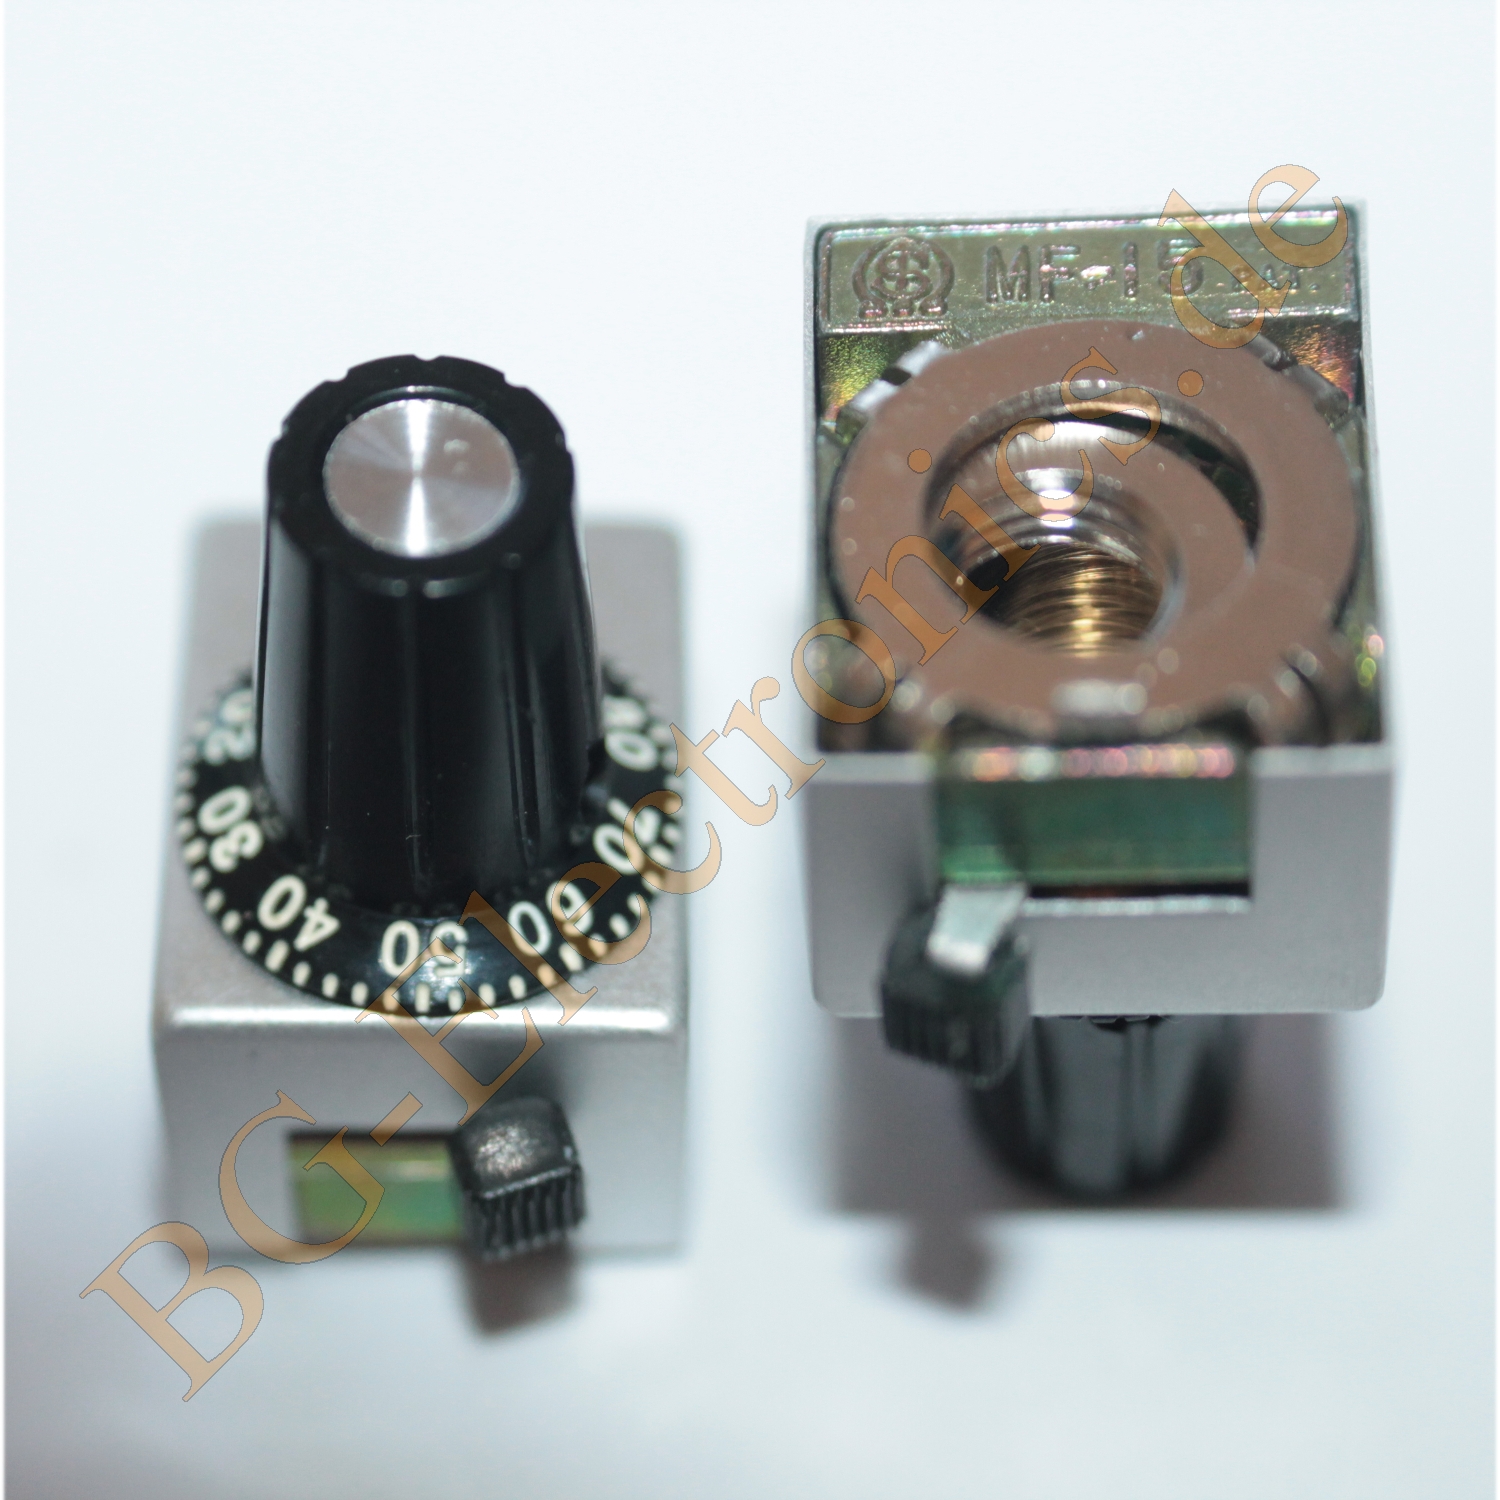 Miniature analog knob